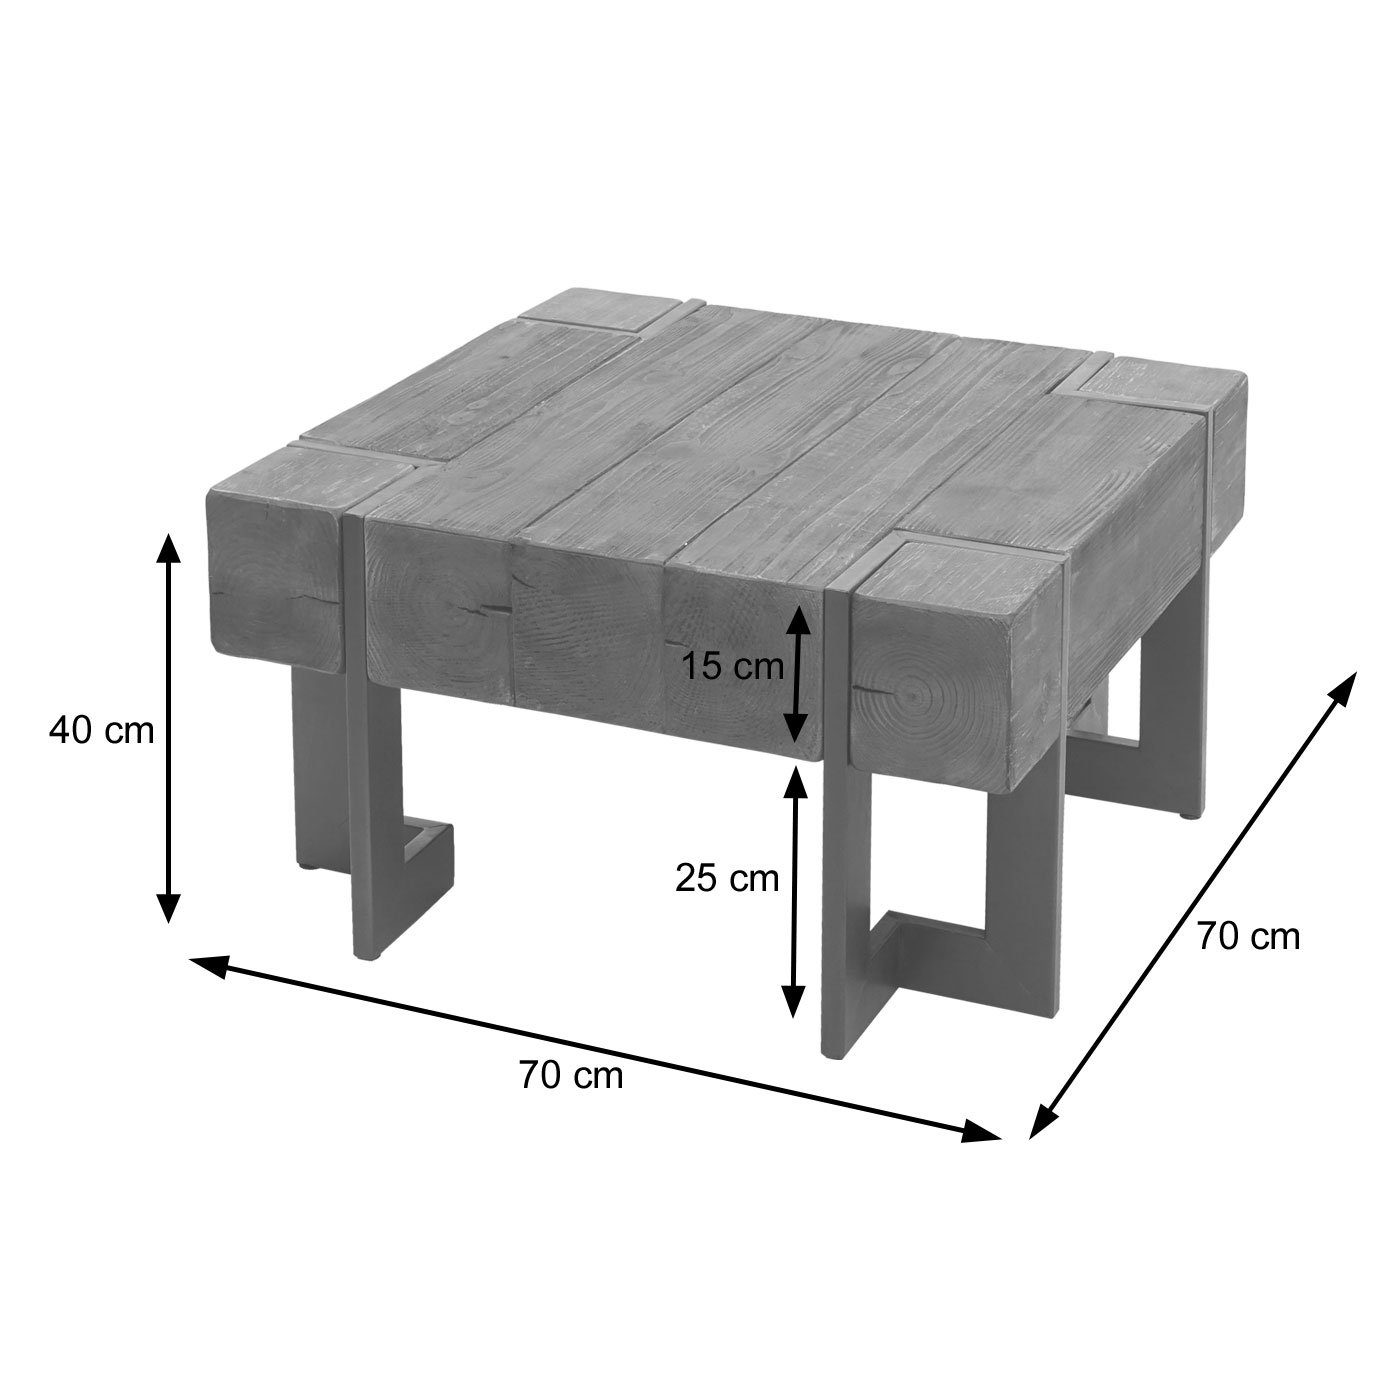 Couchtisch quadratisch Fußbodenschoner, MCW-A15-C, Inklusive braun Standfest, MCW Look, Industrial | Braun